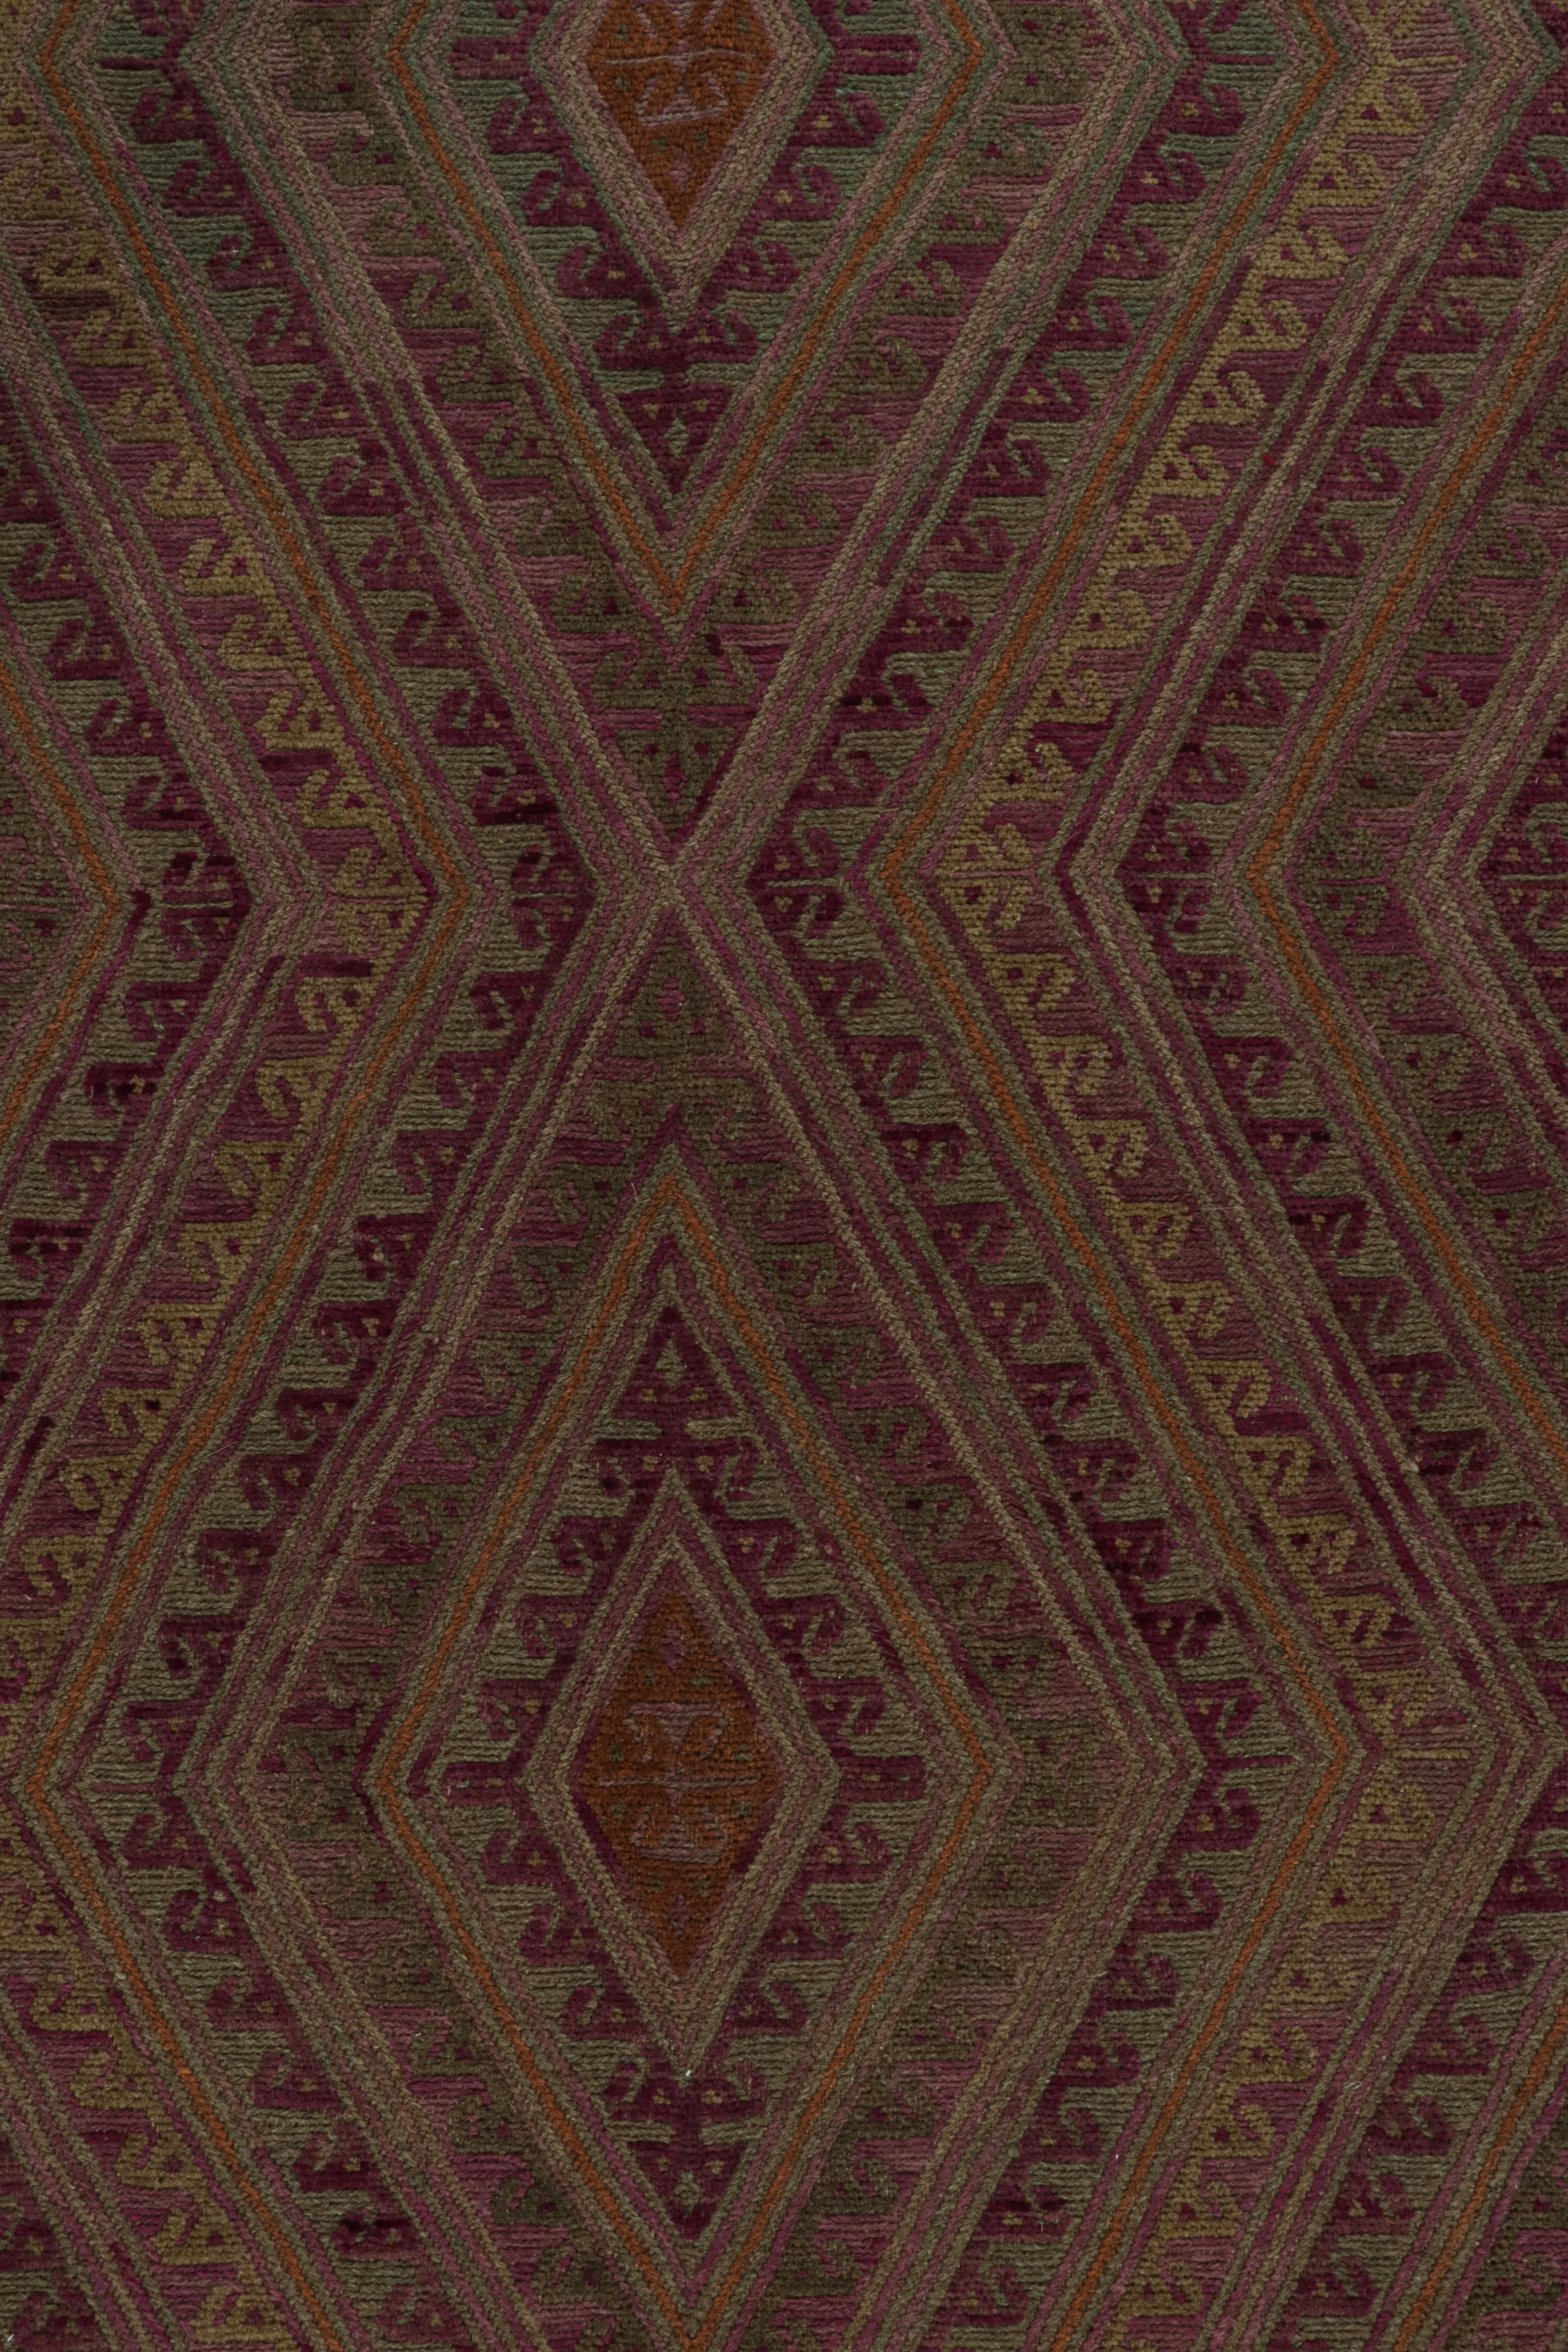 Wool Rug & Kilim’s Mashwani Afghan Tribal Rug in Rust Tones with Geometric Patterns For Sale